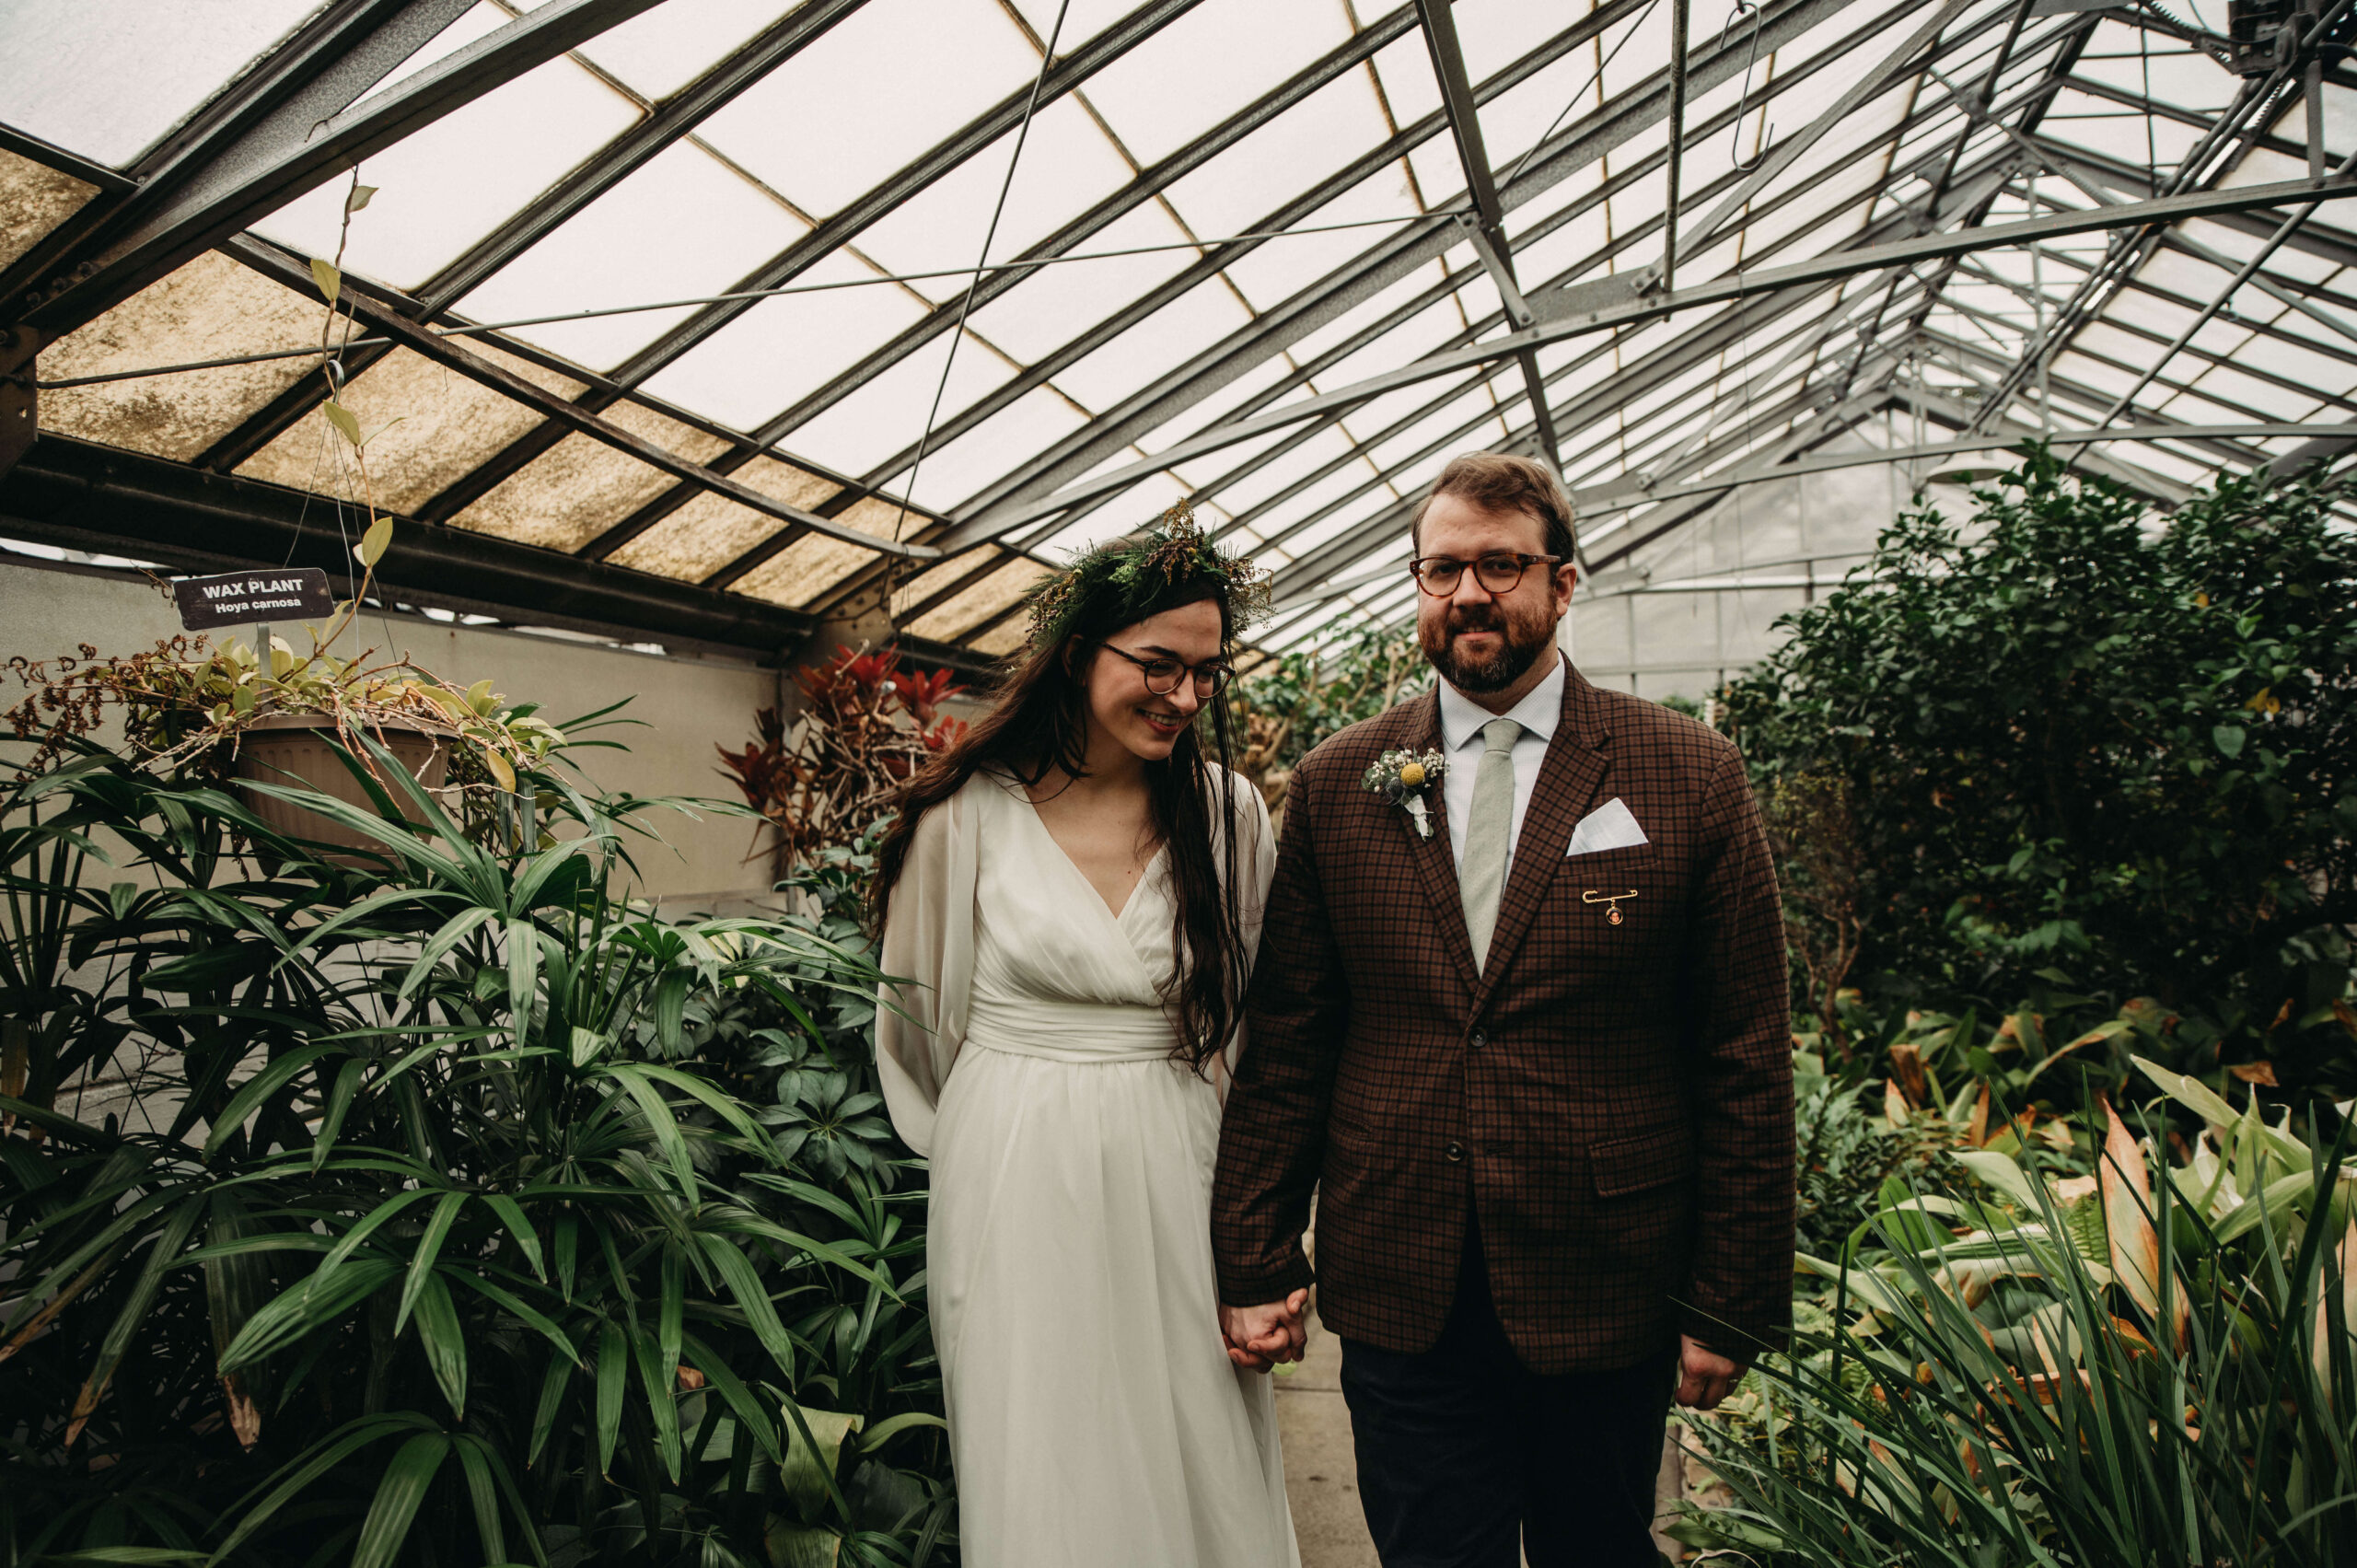 Rockefellar greenhouse wedding features boho vintage couple walking through aisle.